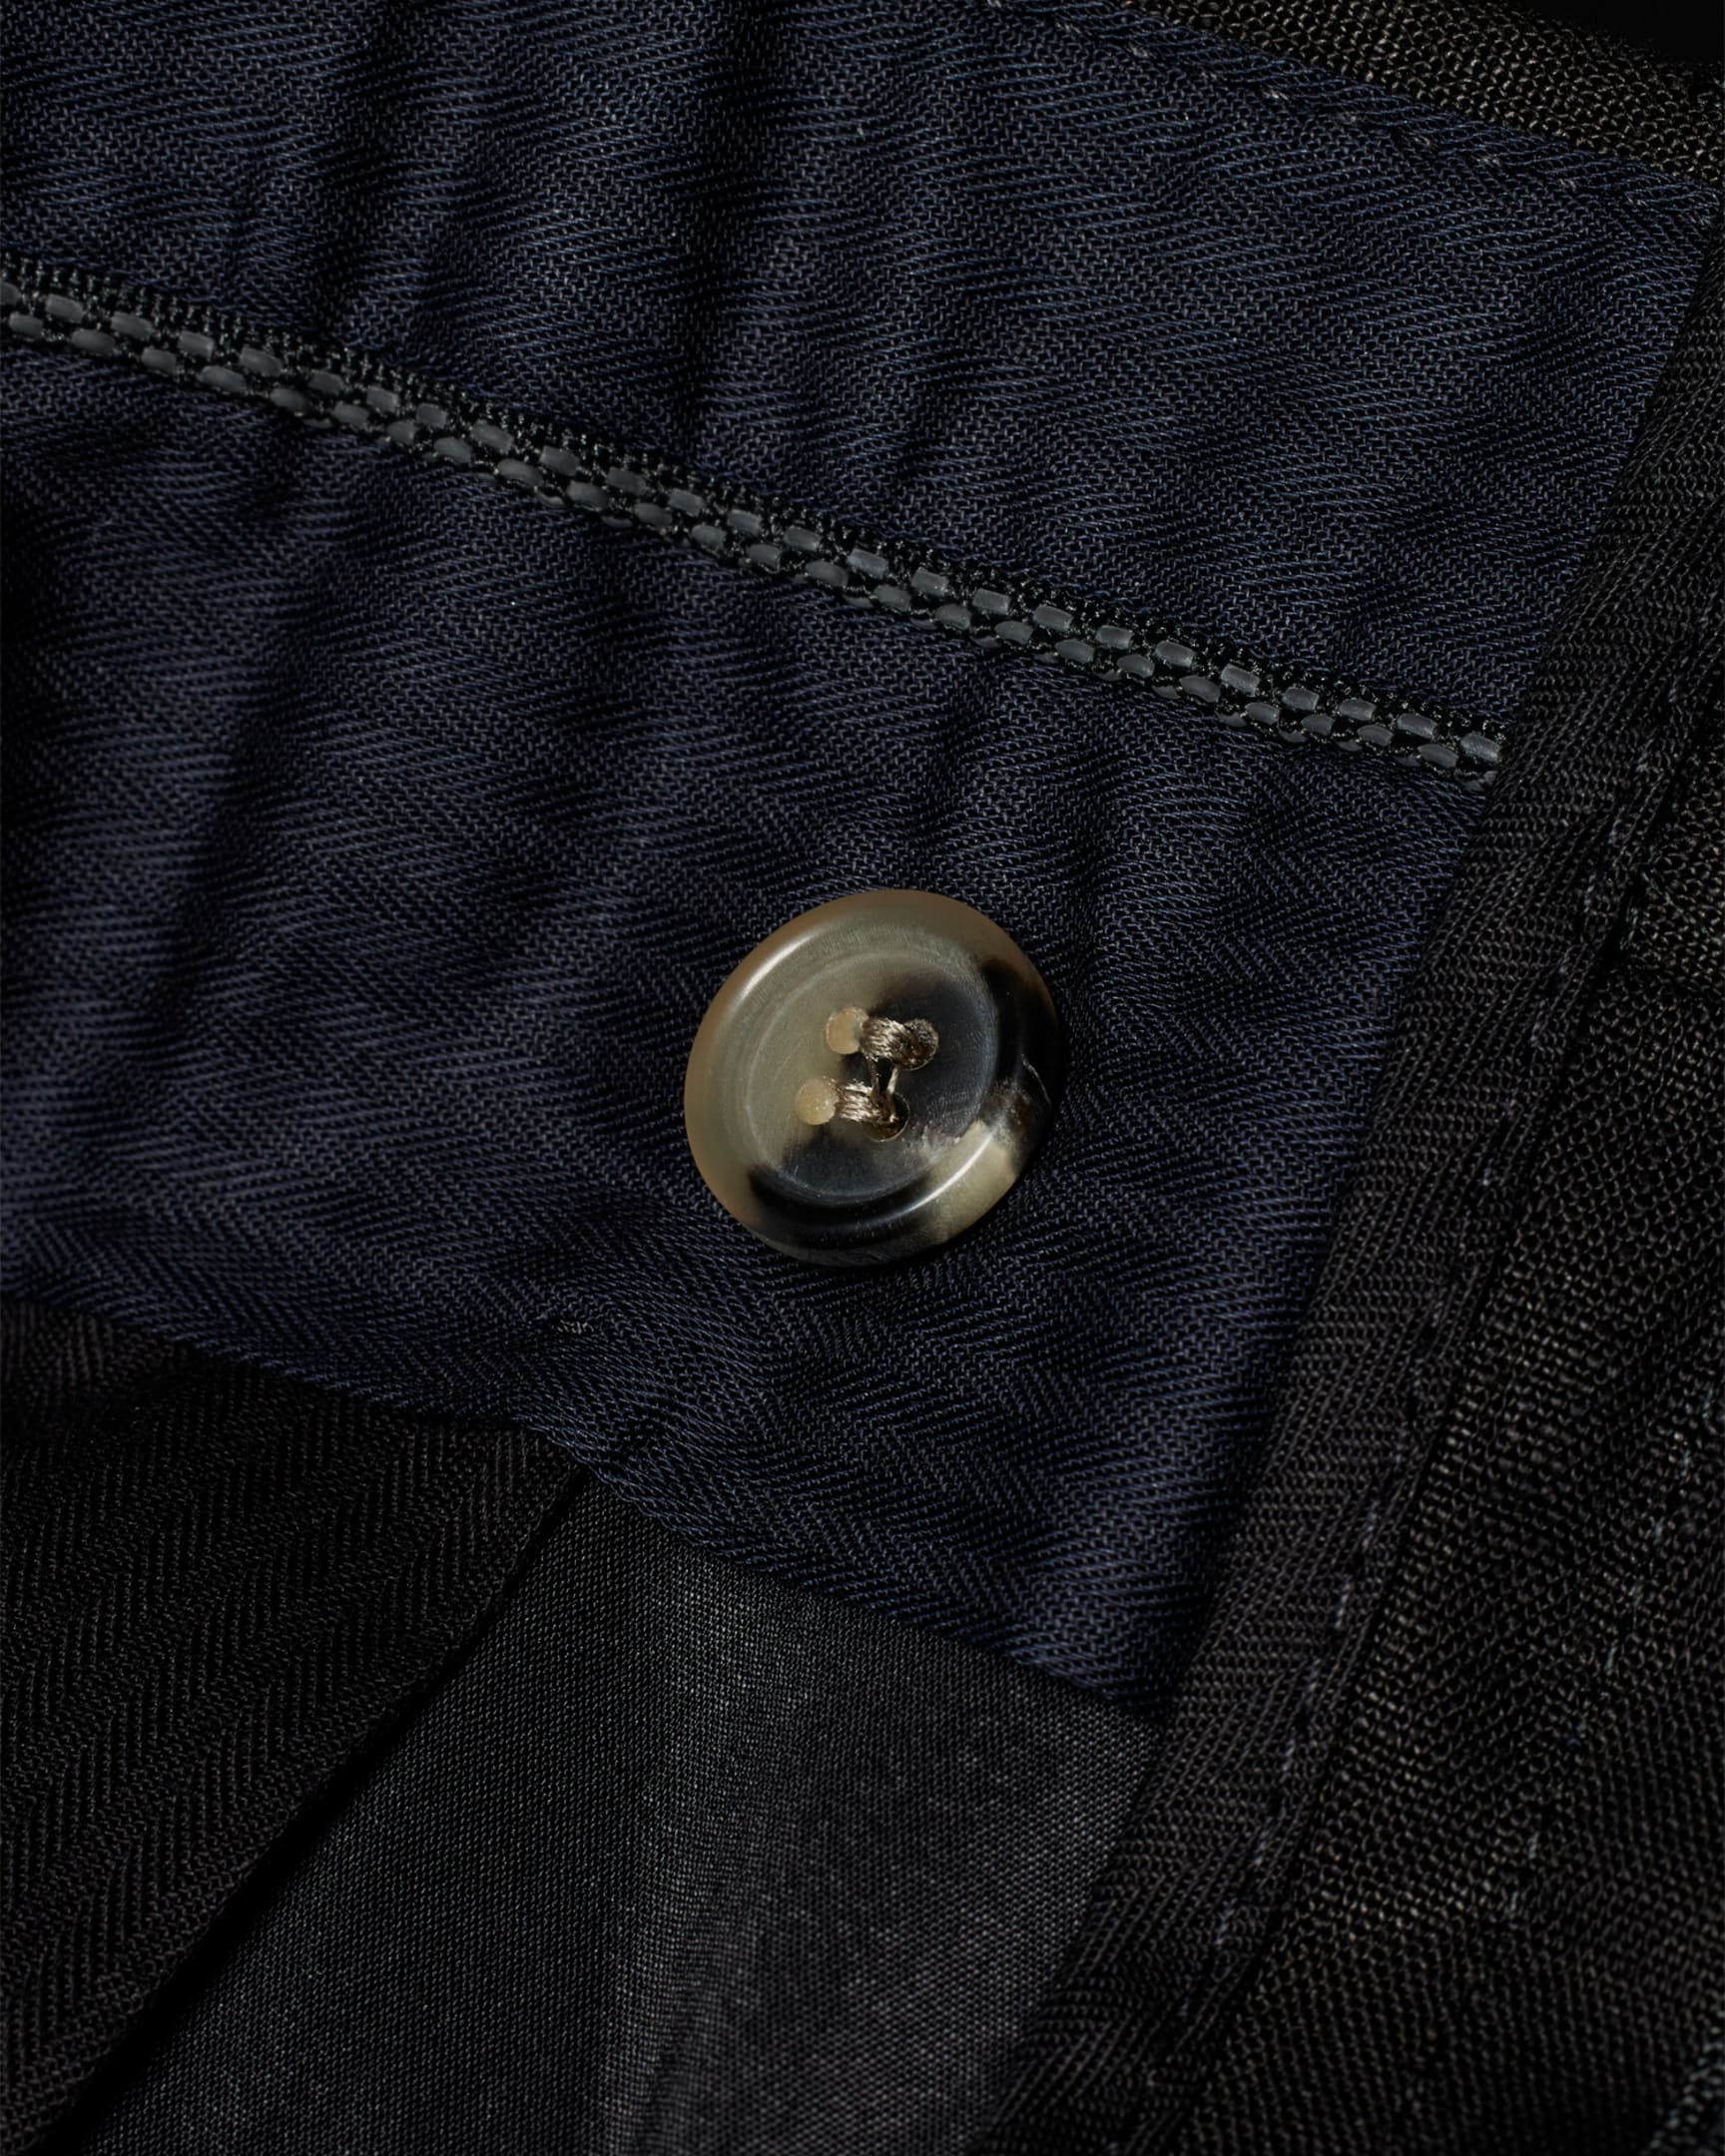 Detail View - Black Linen Trousers Paul Smith